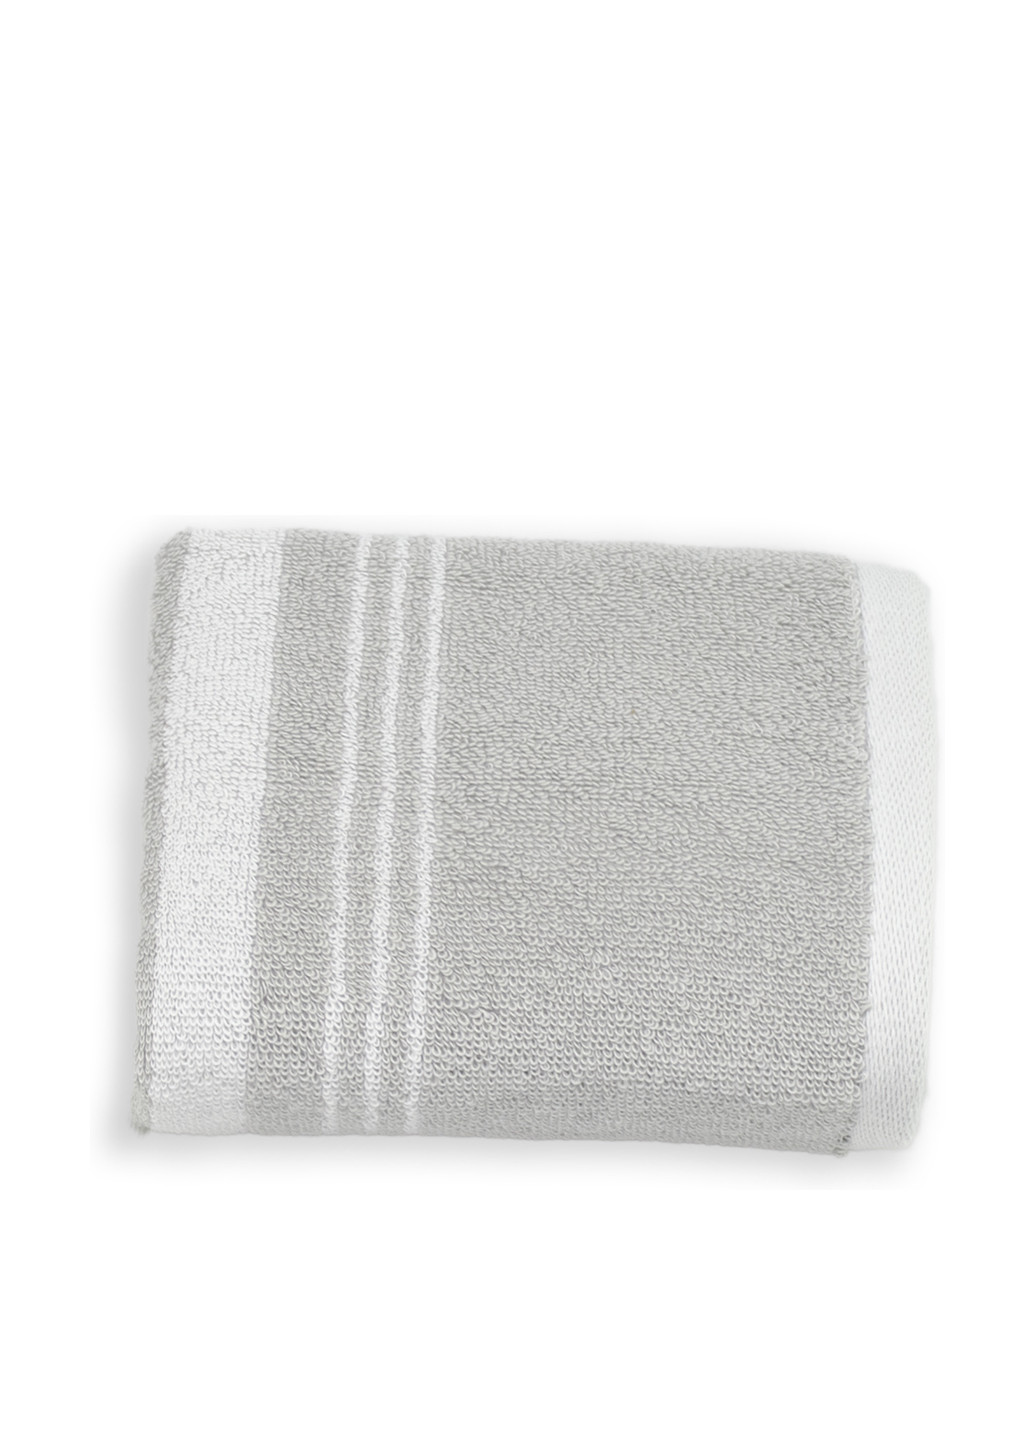 No Brand полотенце, 40х60 см полоска светло-серый производство - Турция